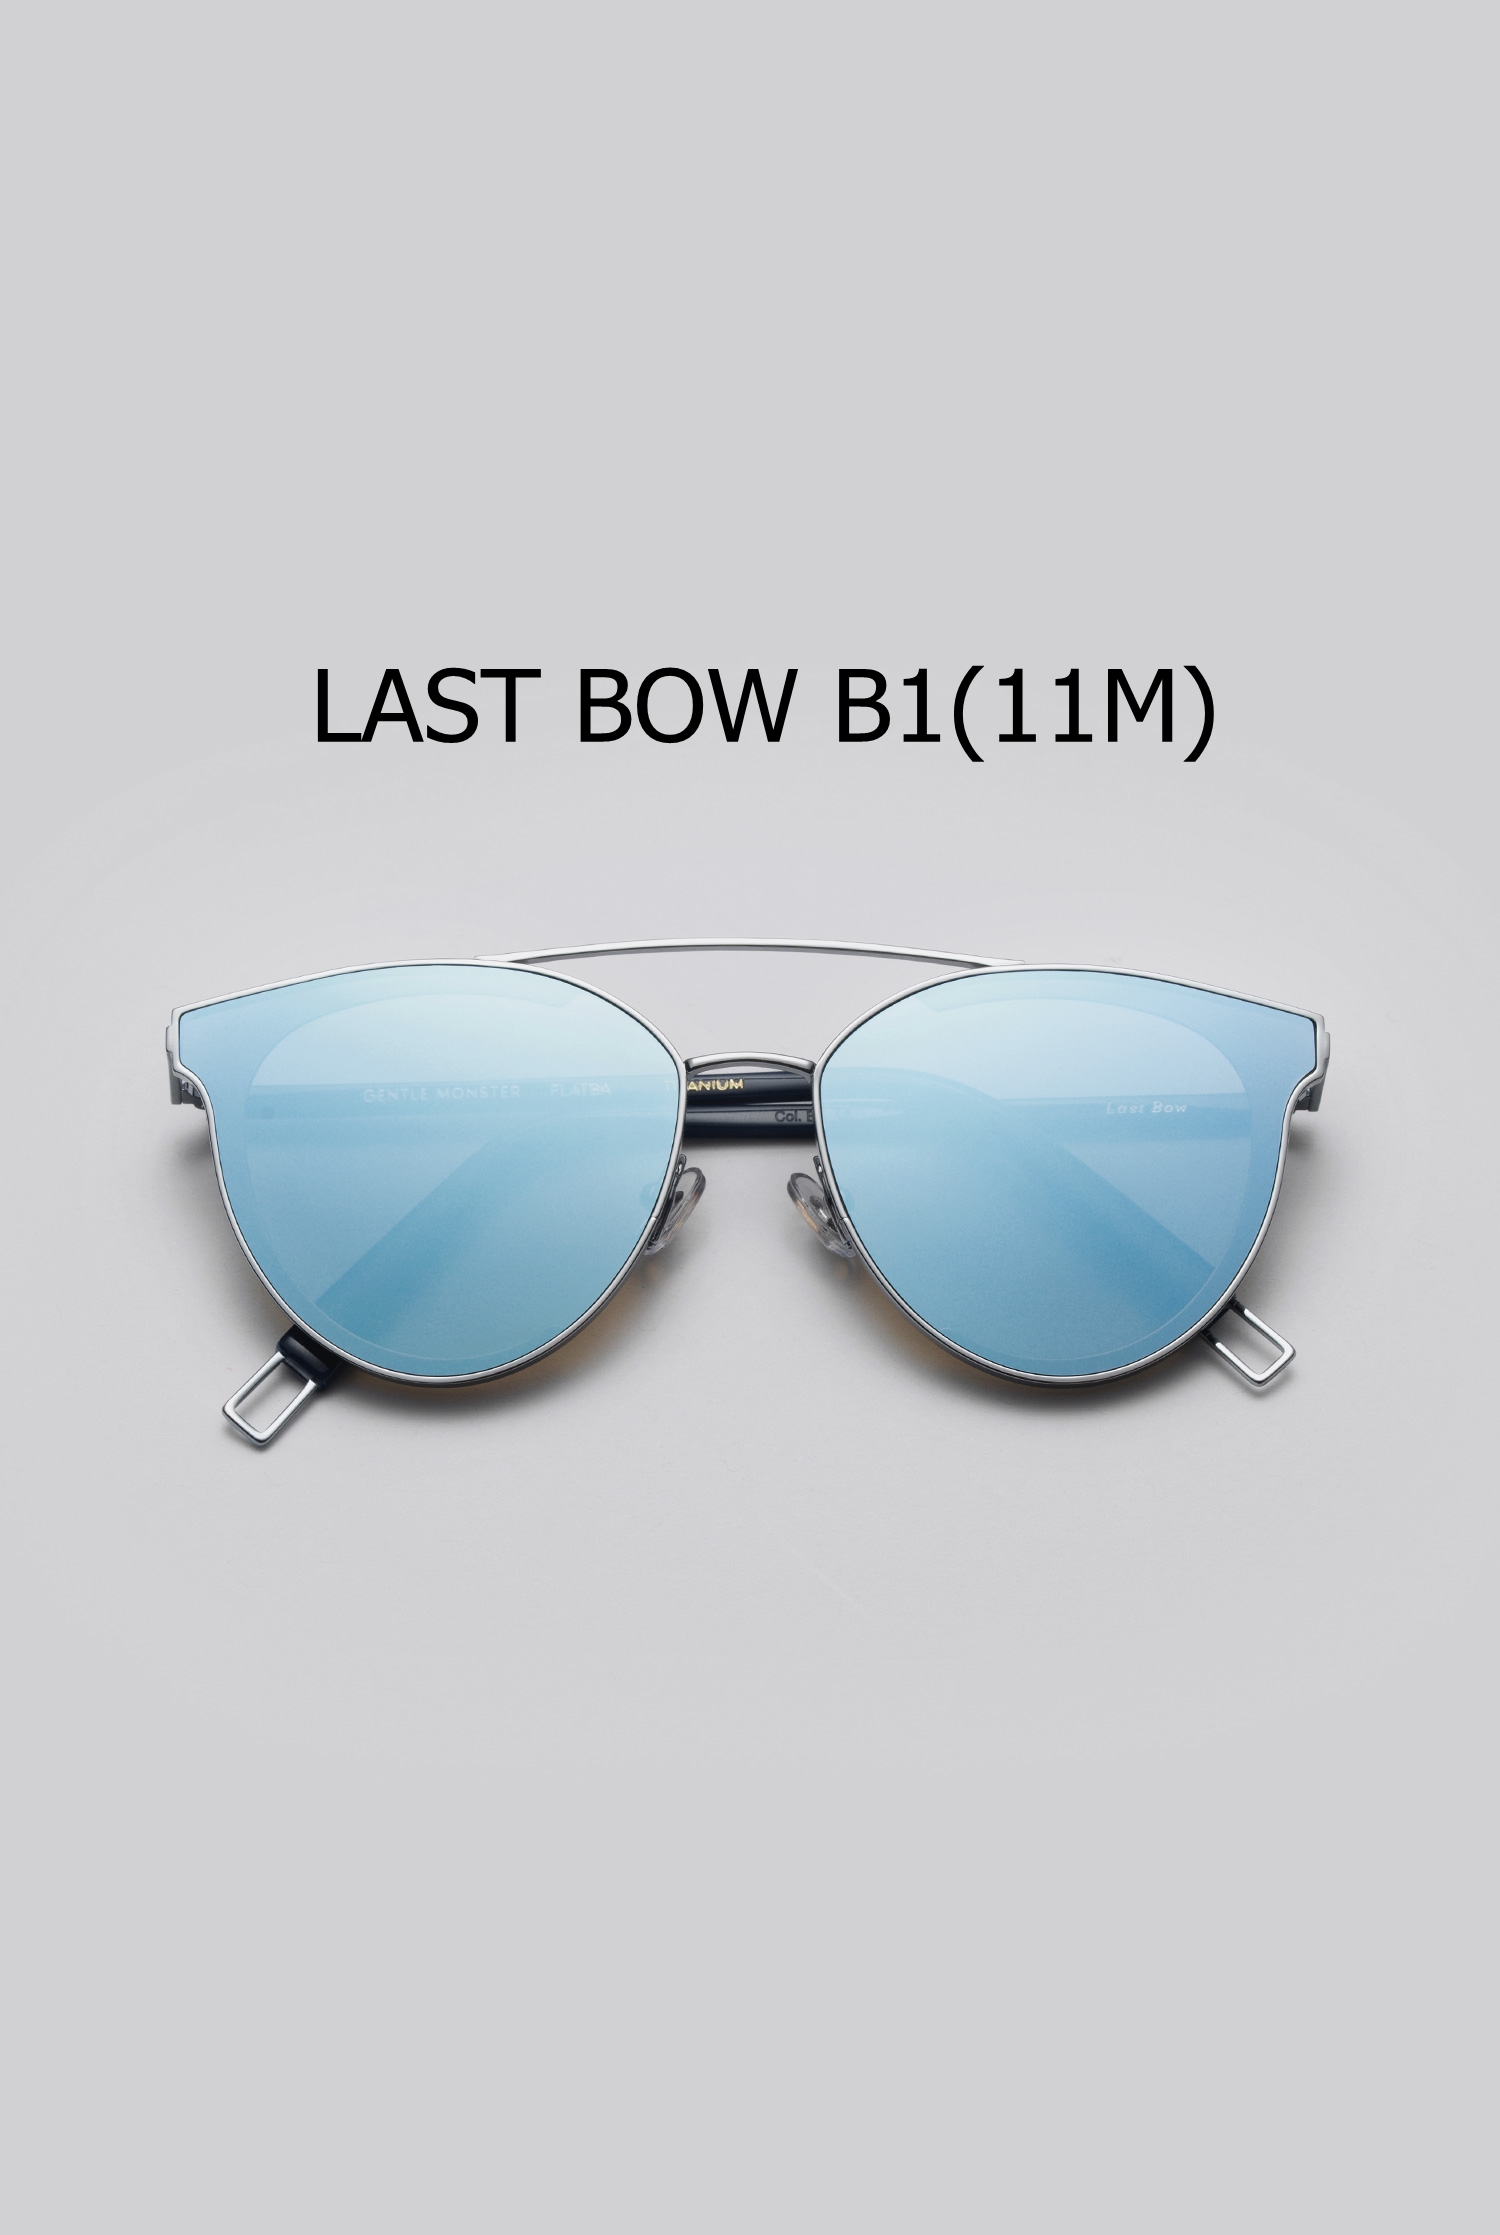 LAST BOW B1(11M) 